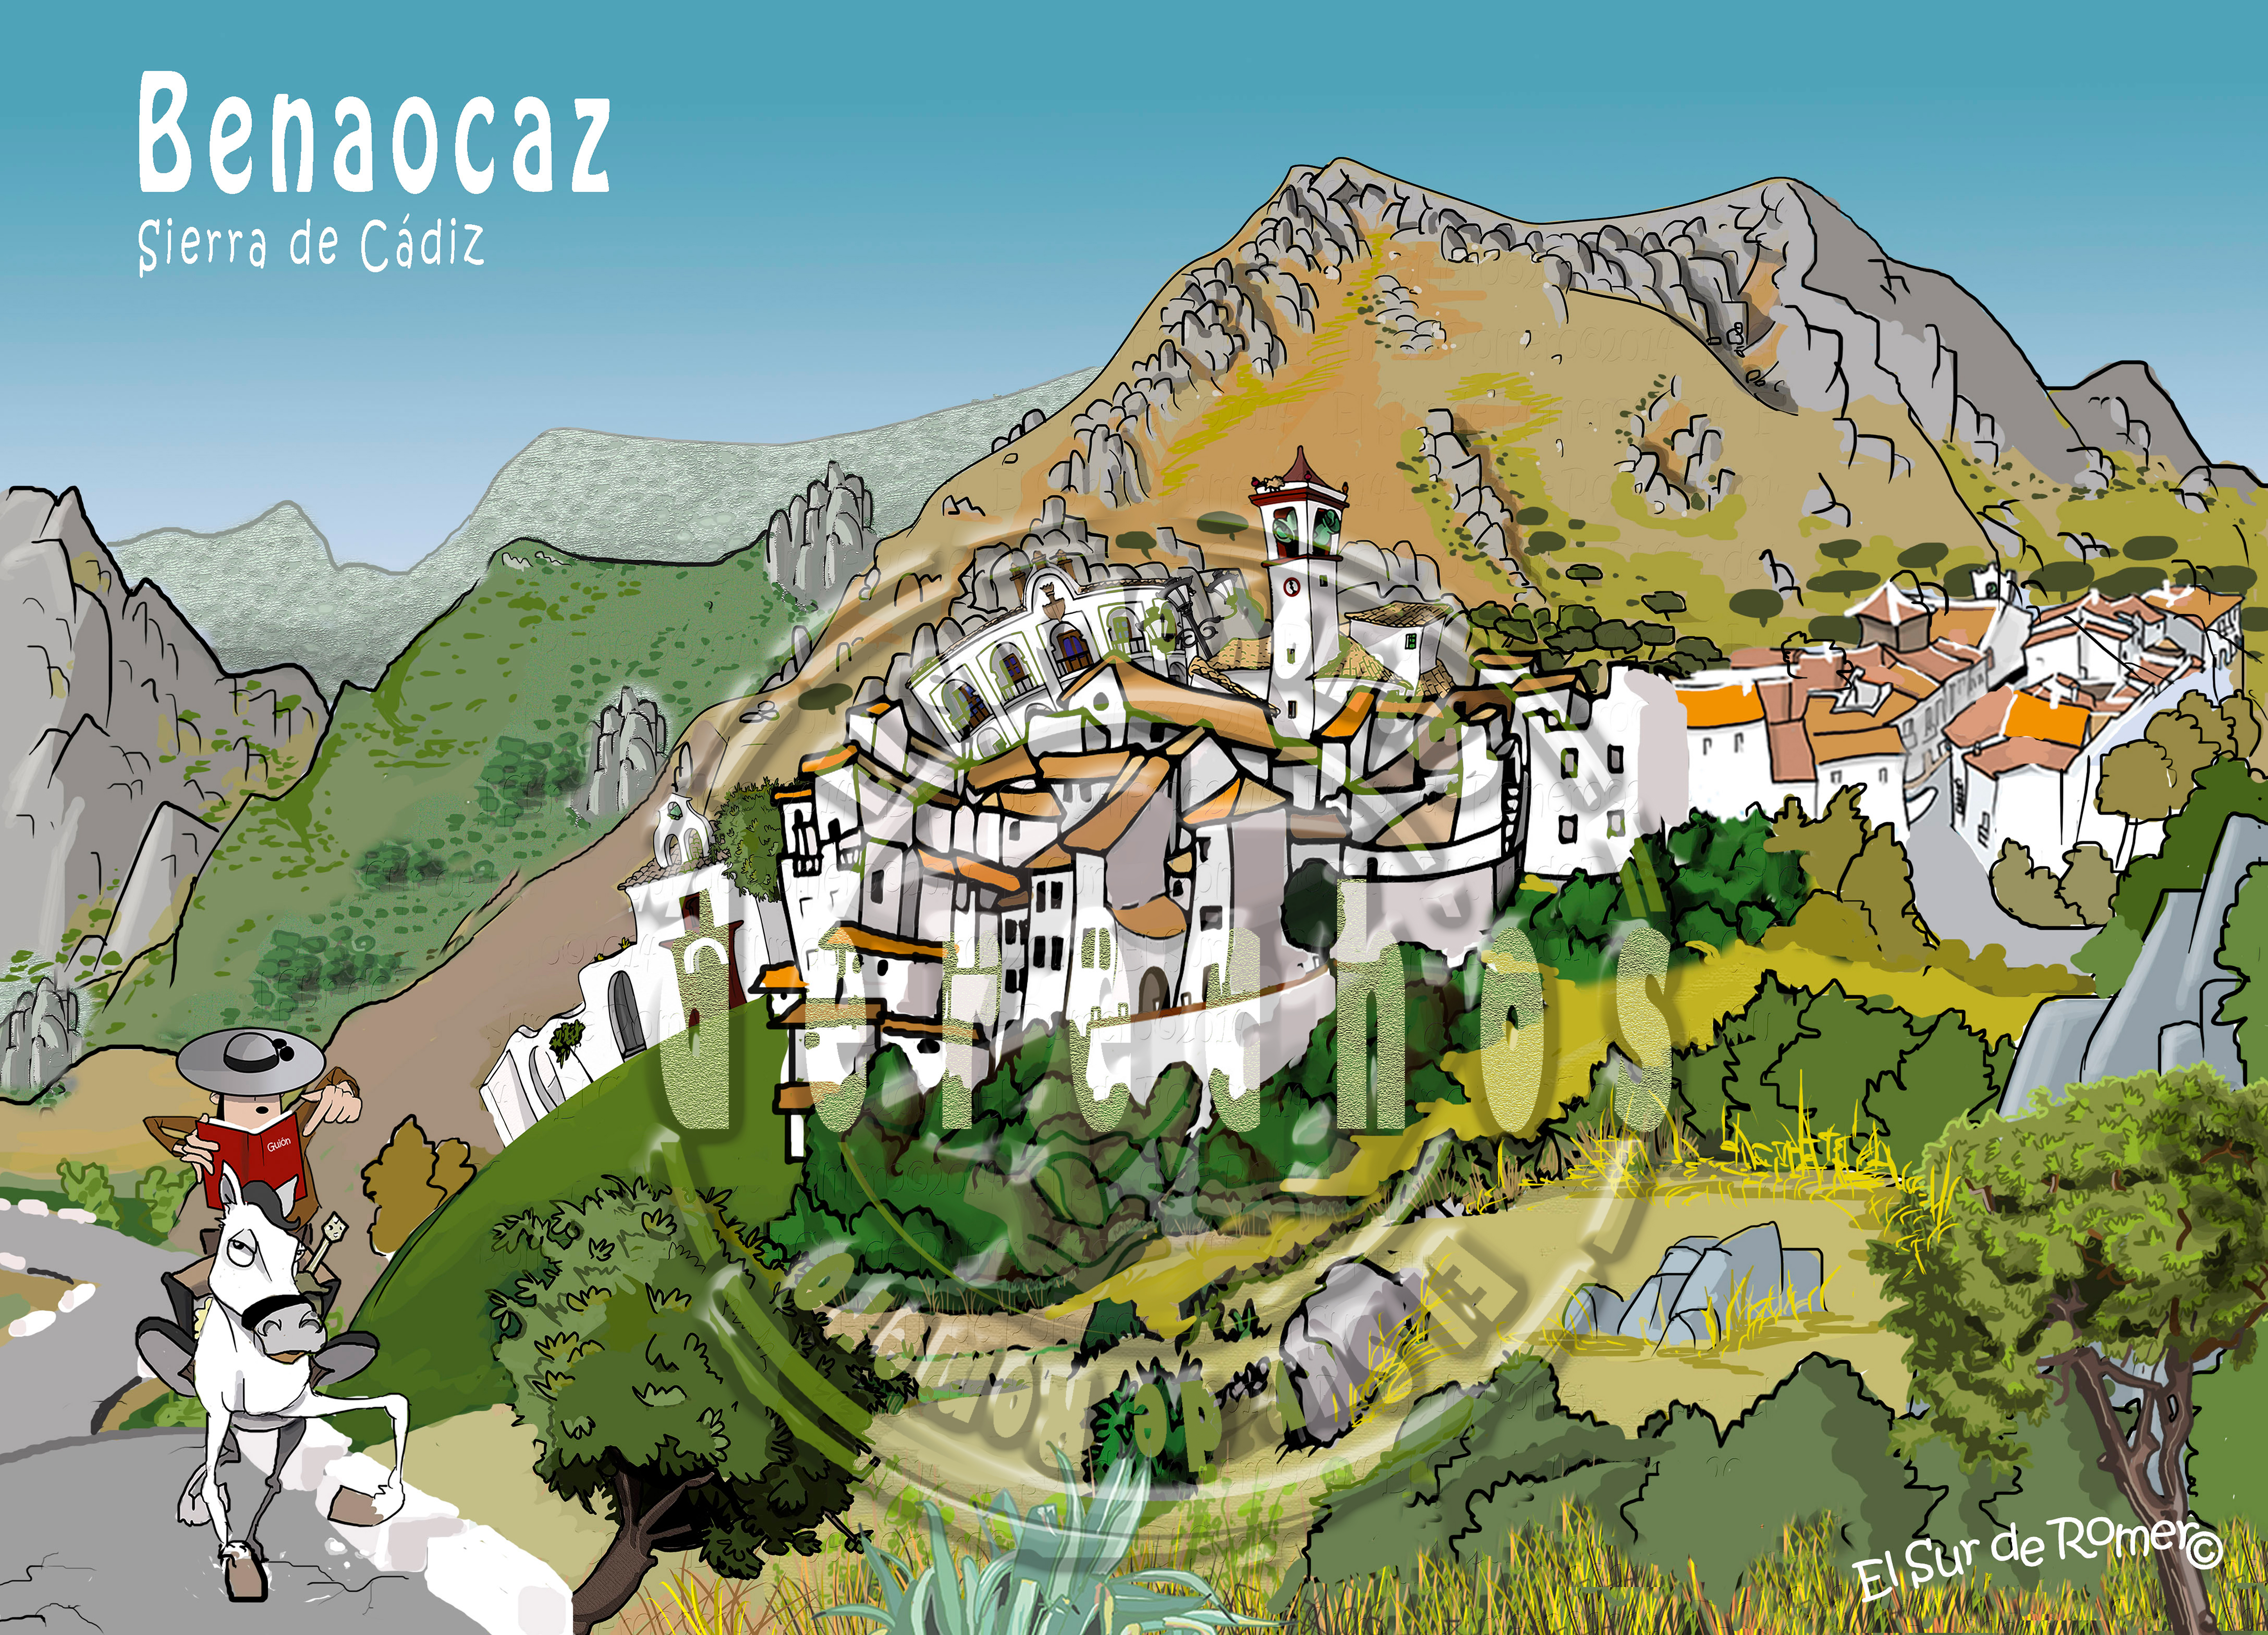 Benaocaz en dibujo, sierra de Cádiz.